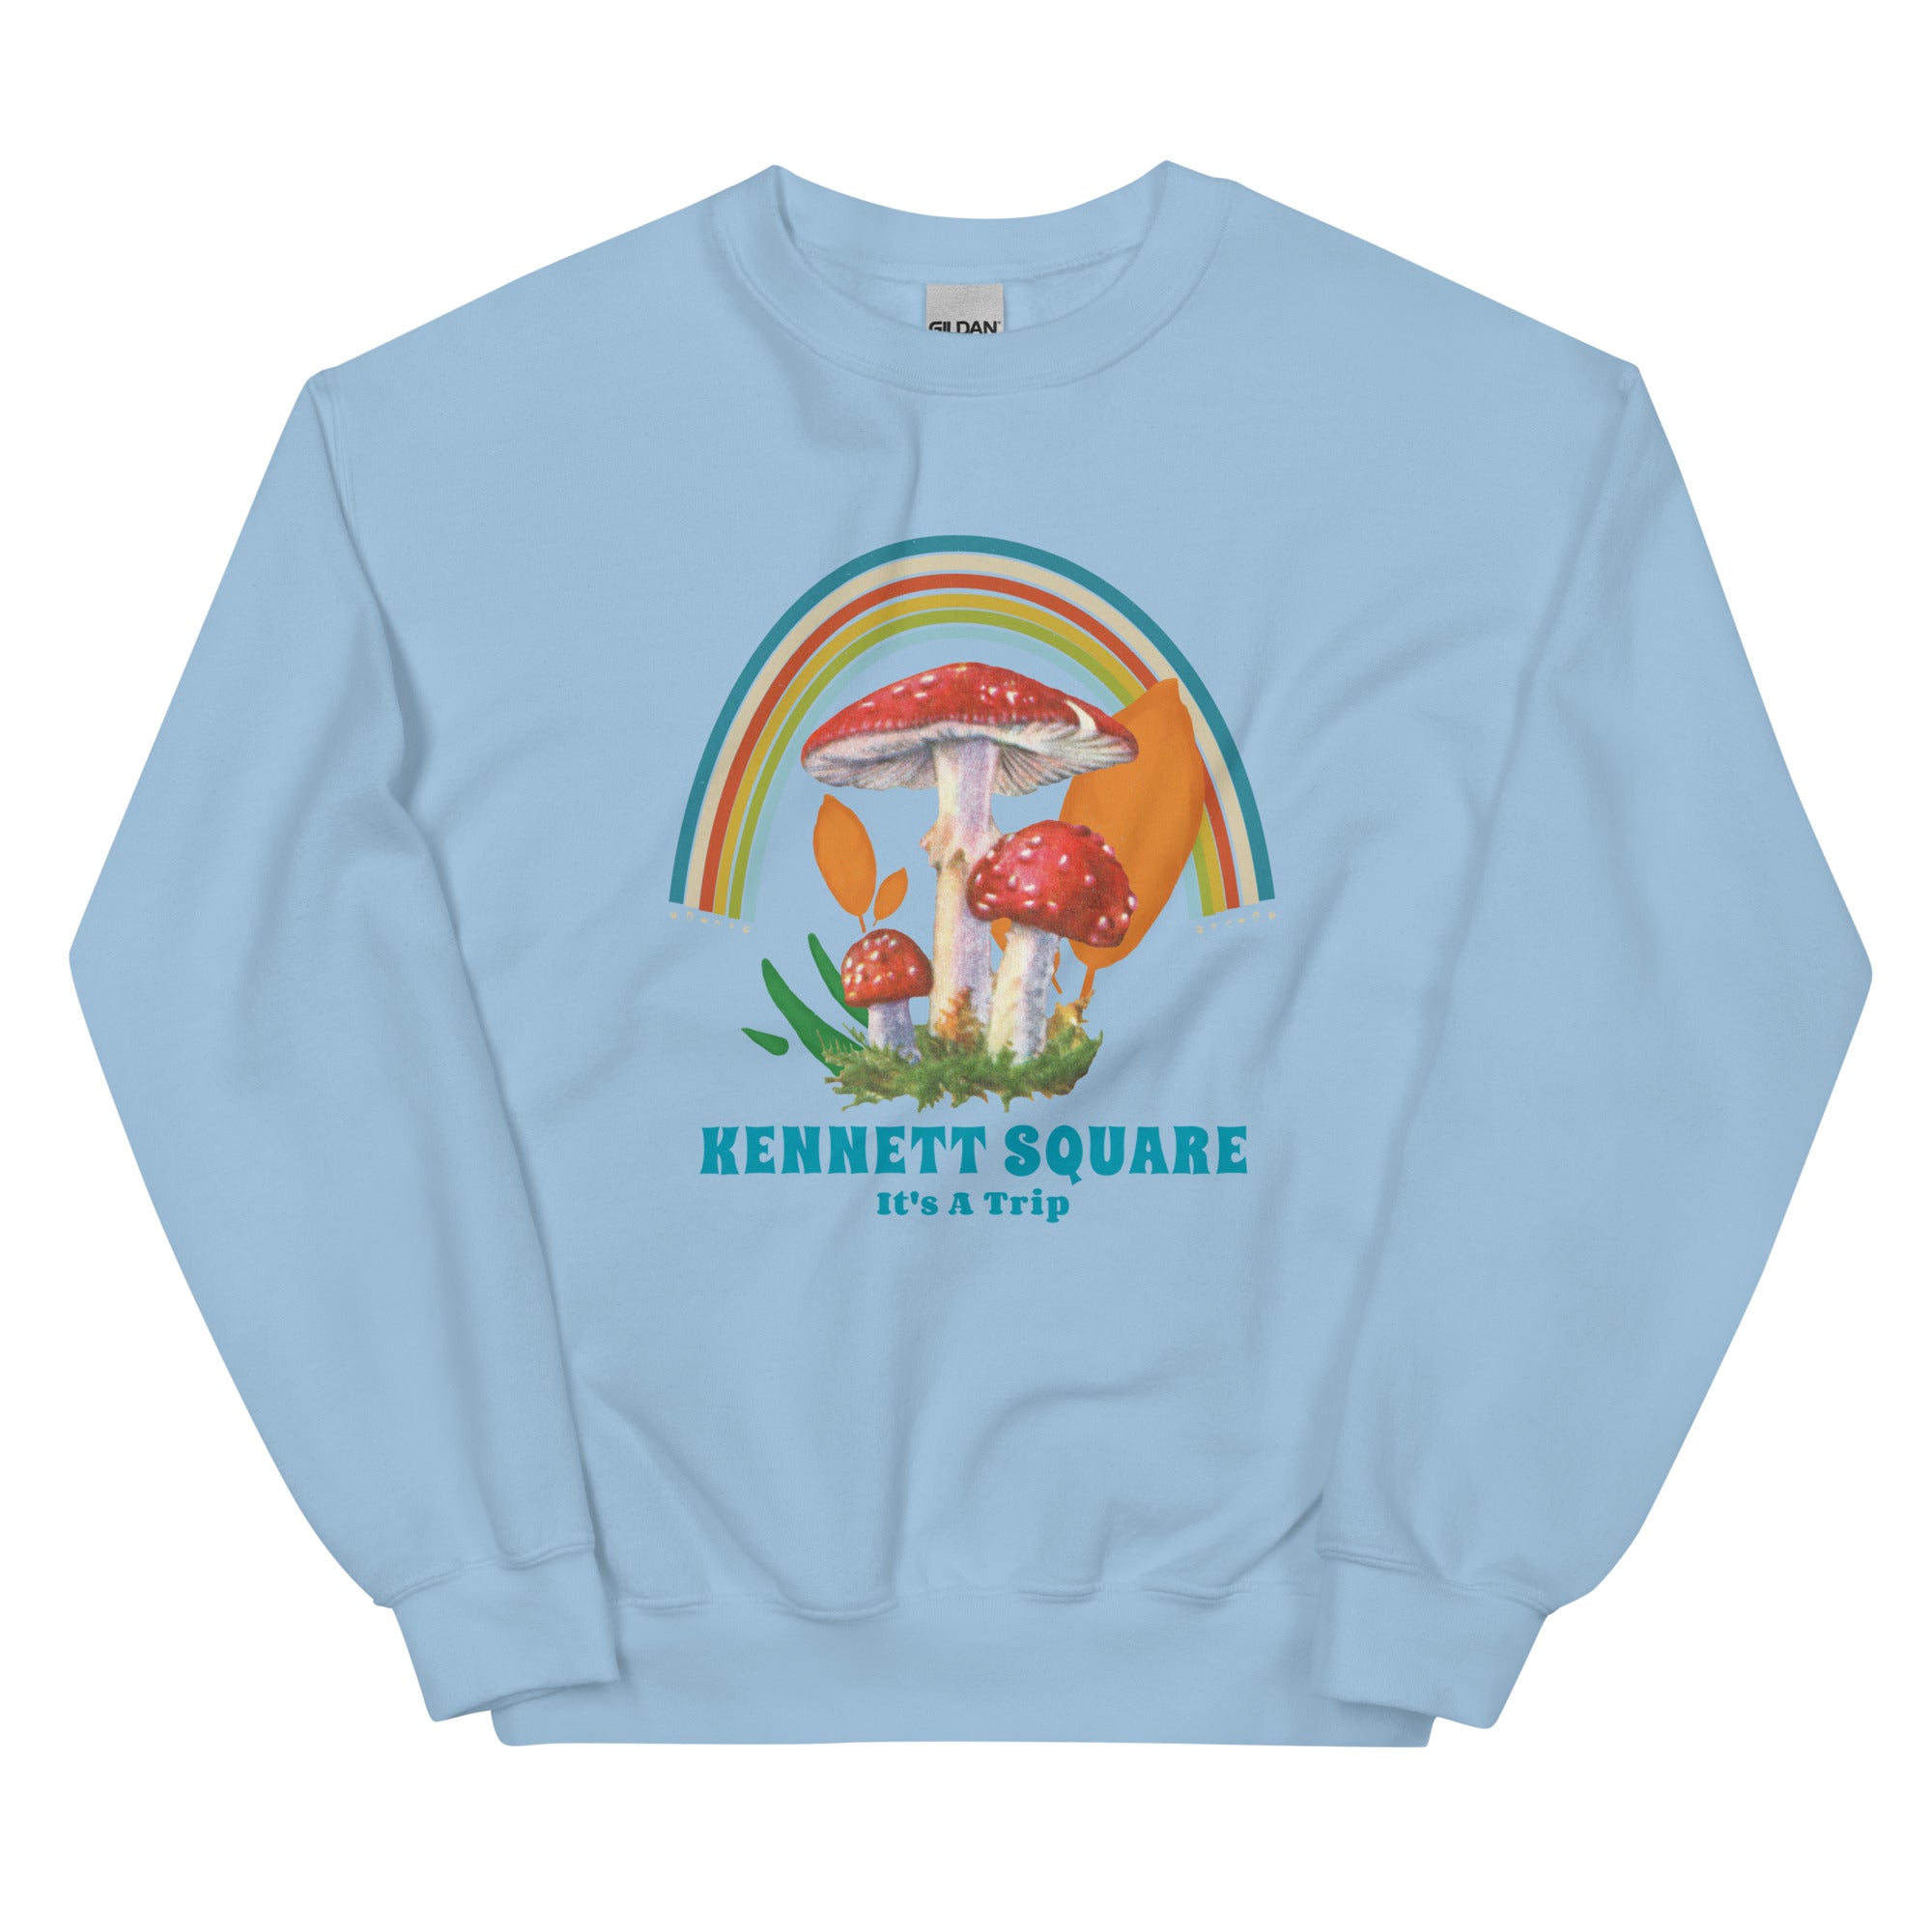 "Kennett Square Is a Trip" Sweatshirt